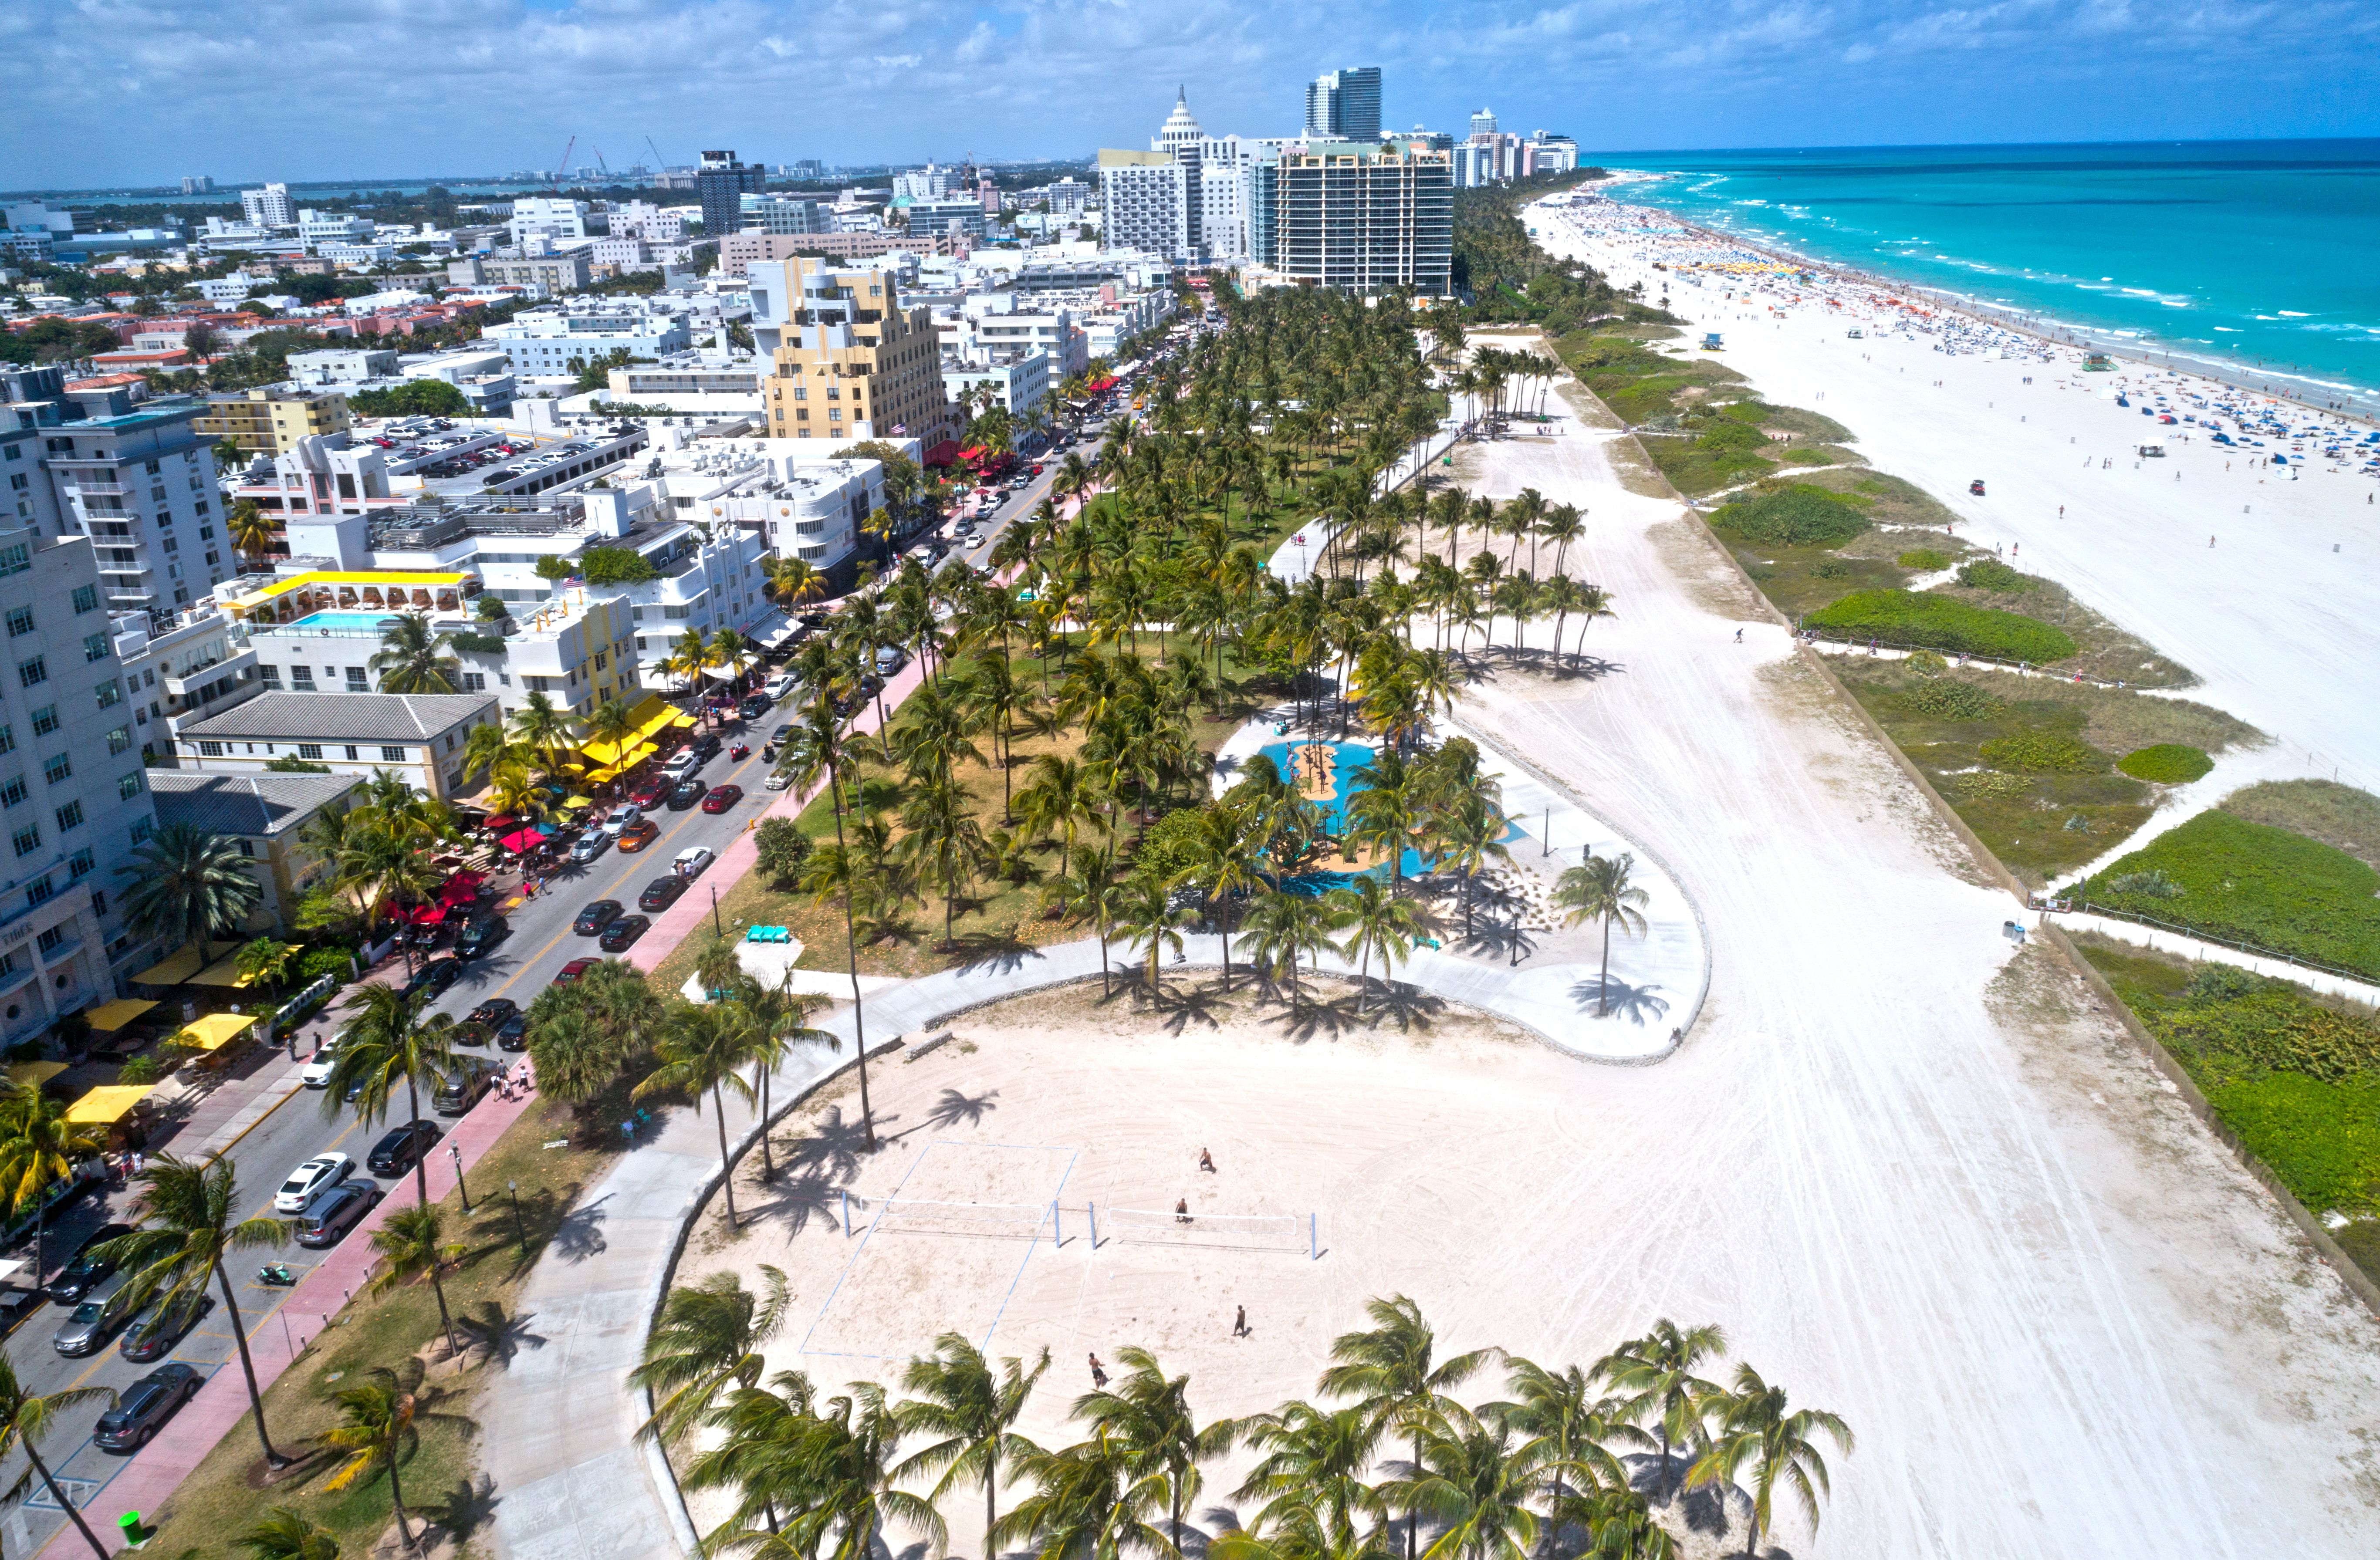 Aerial view of Lummus Park and Ocean Drive in Miami, Florida